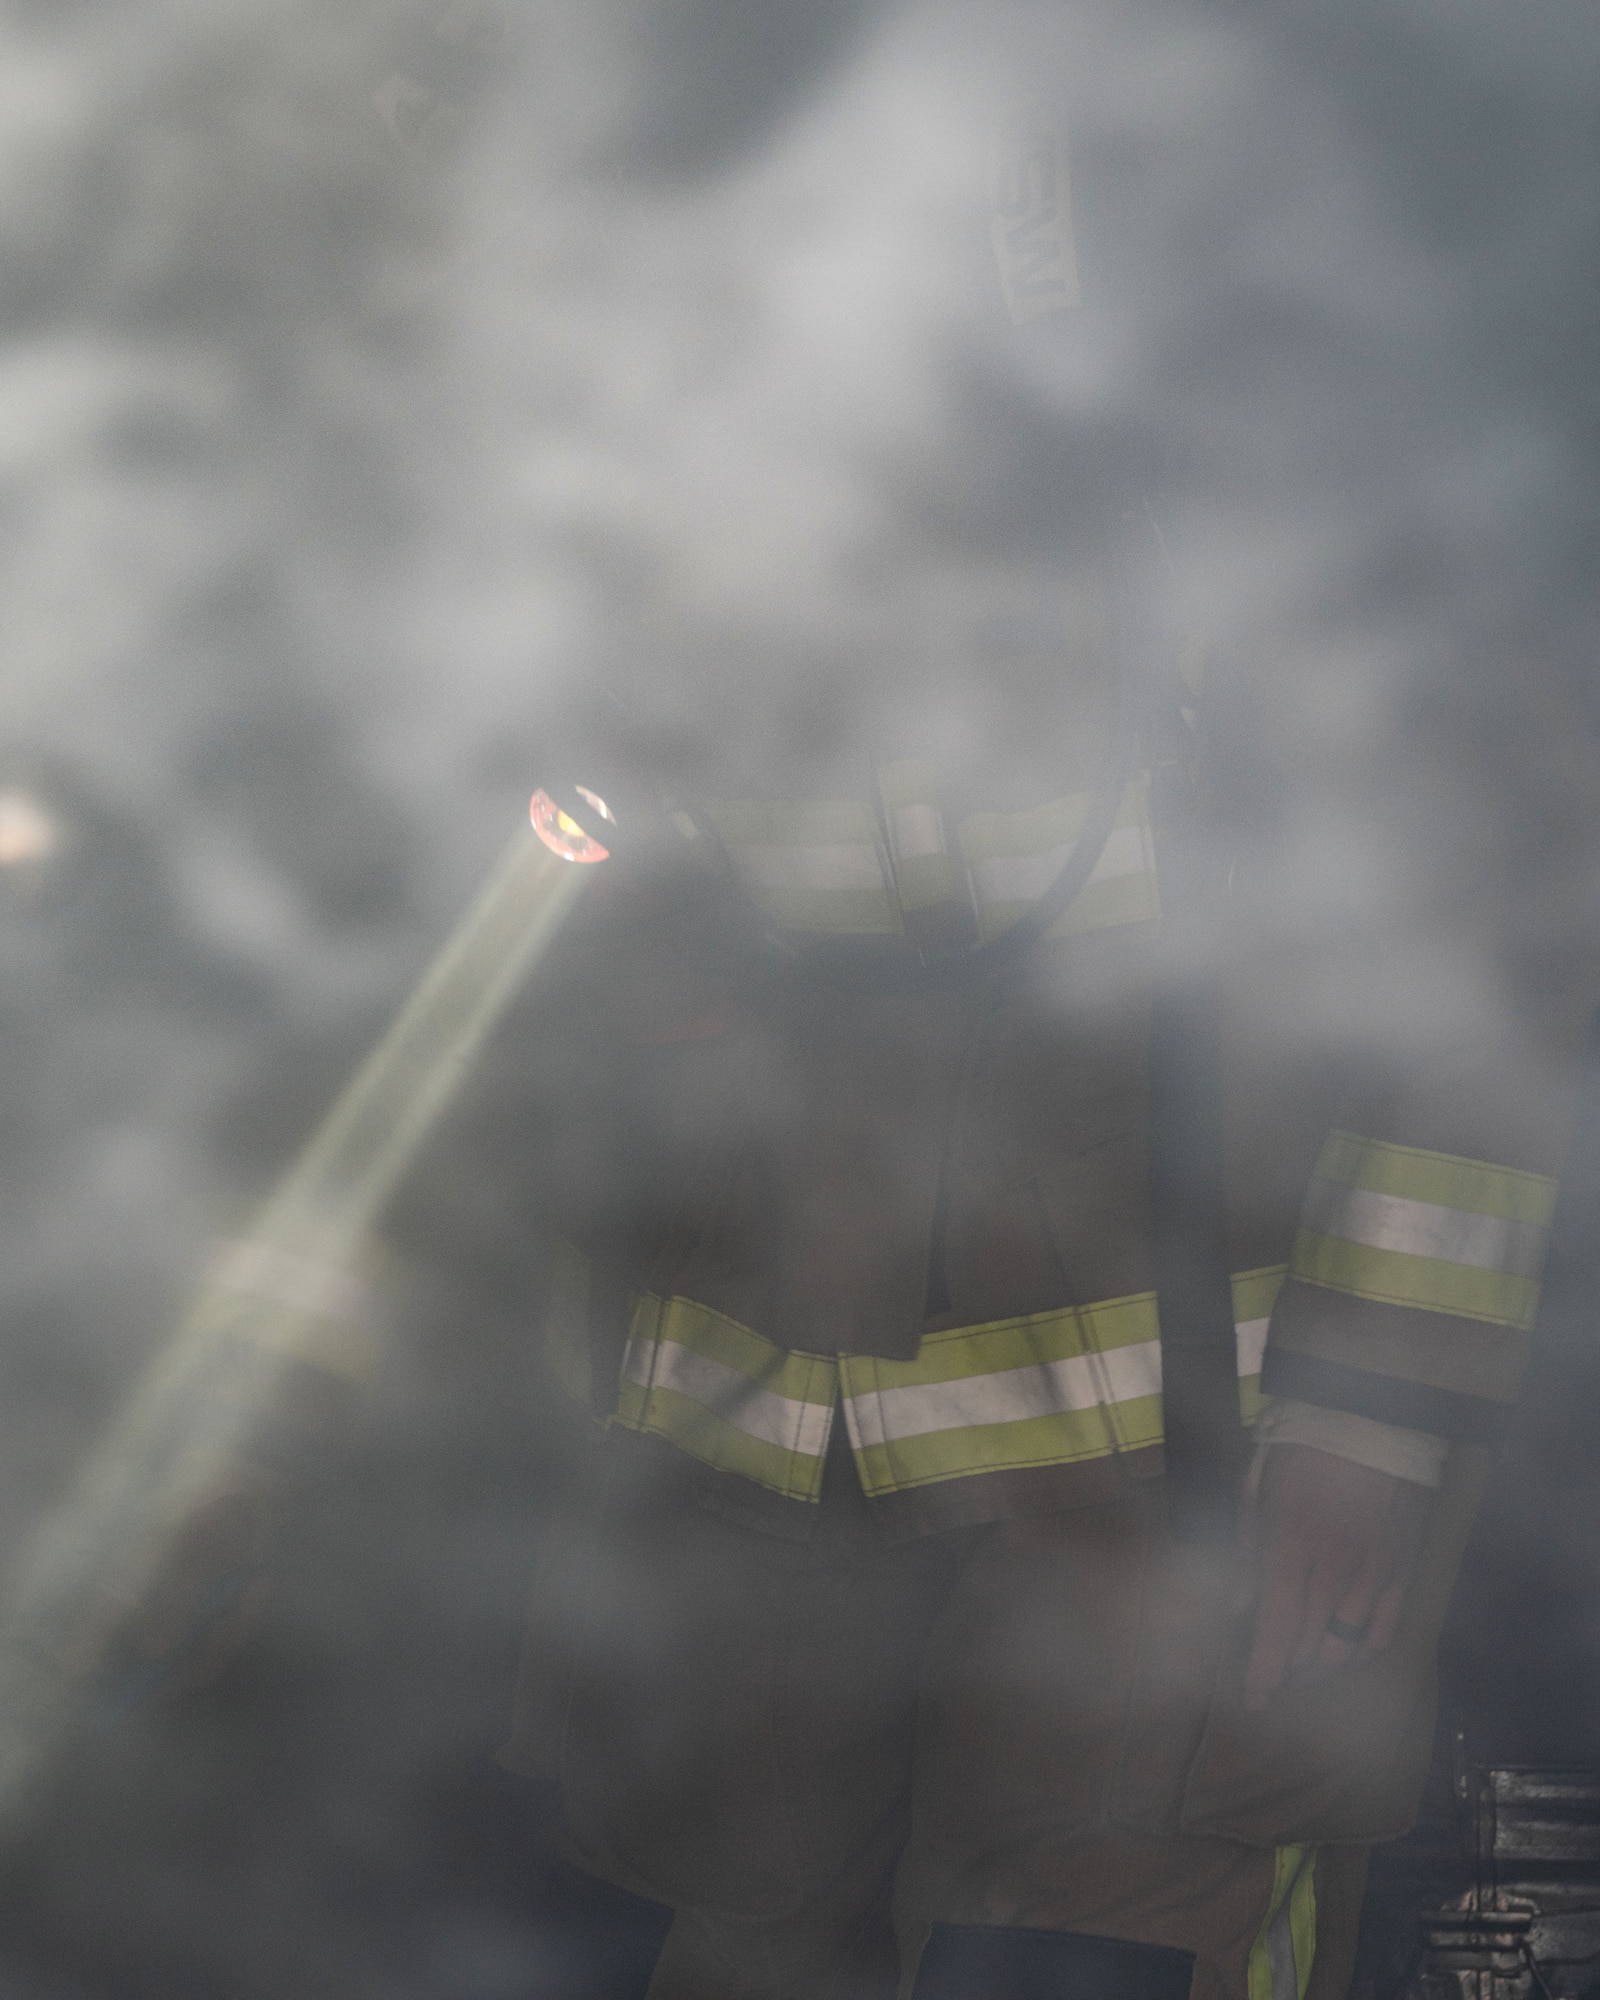 A fireman shines a light through a smoke filled room.